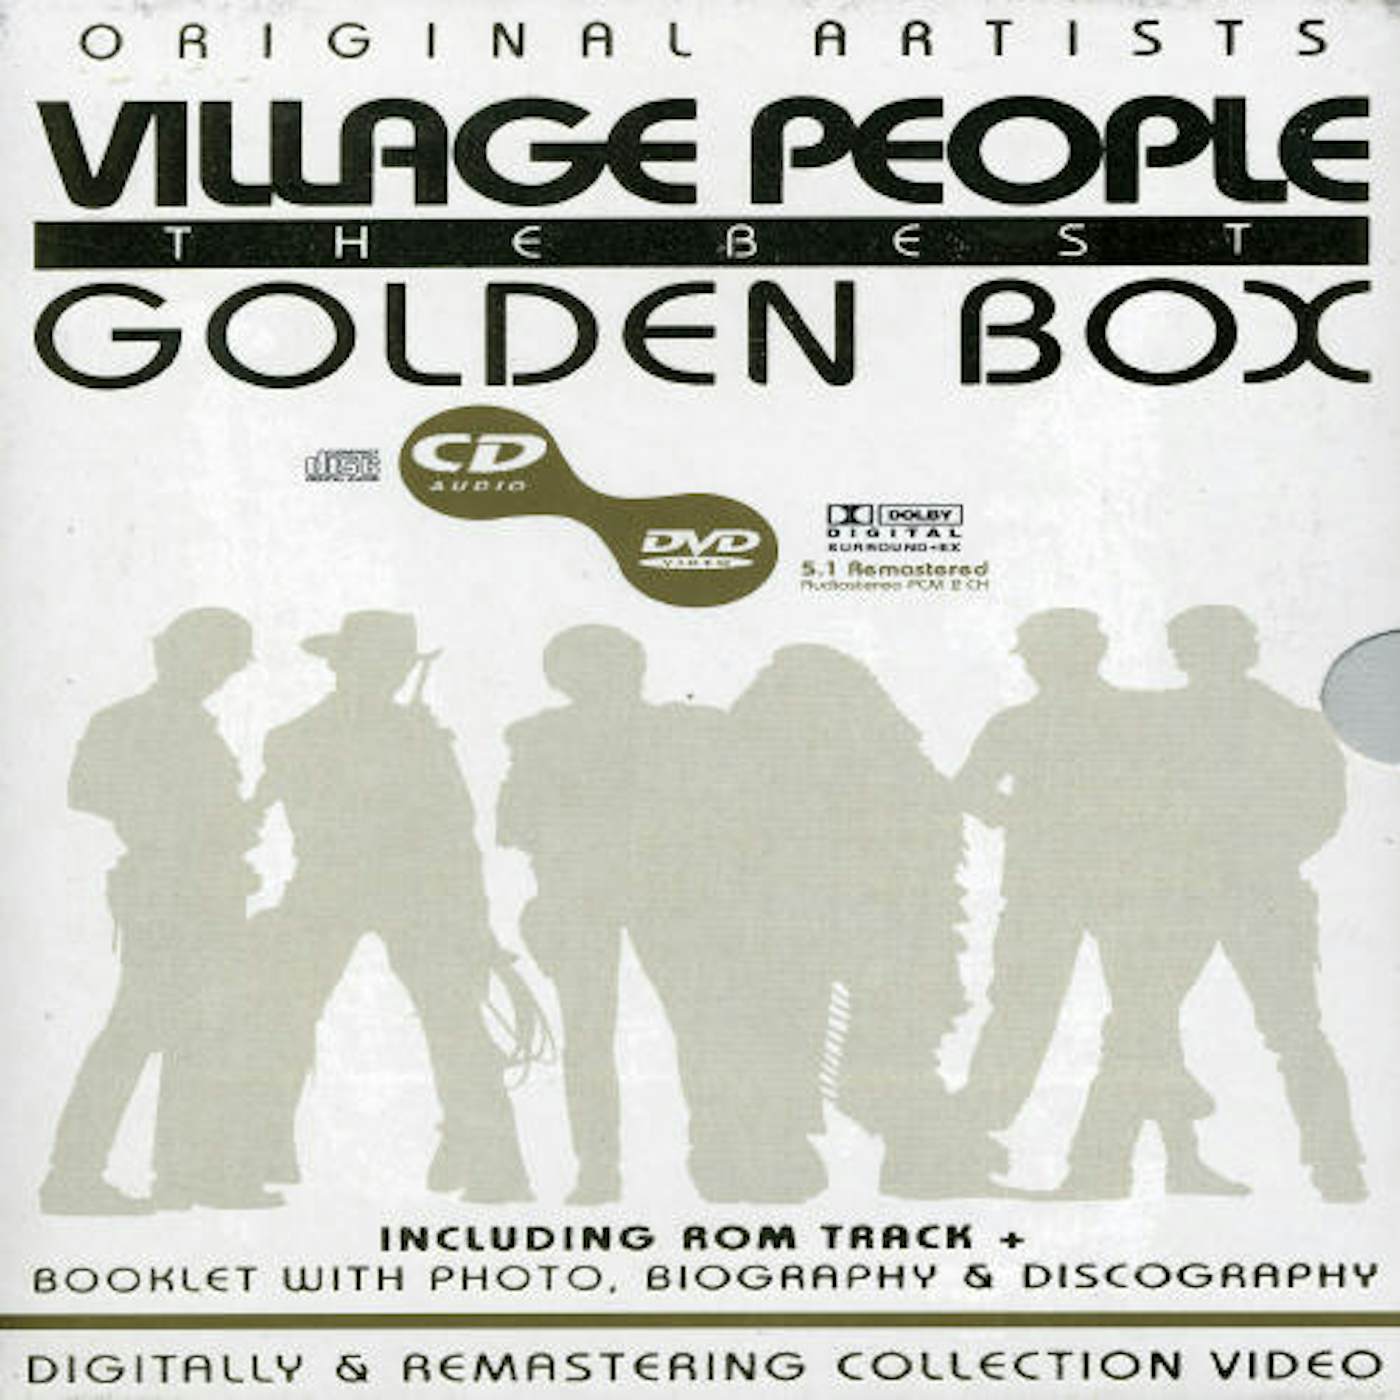 Good as gold three laws. People Golden песня. Golden people производитель. Village people - the best - Golden Box covrik. Village people DVD Cover.